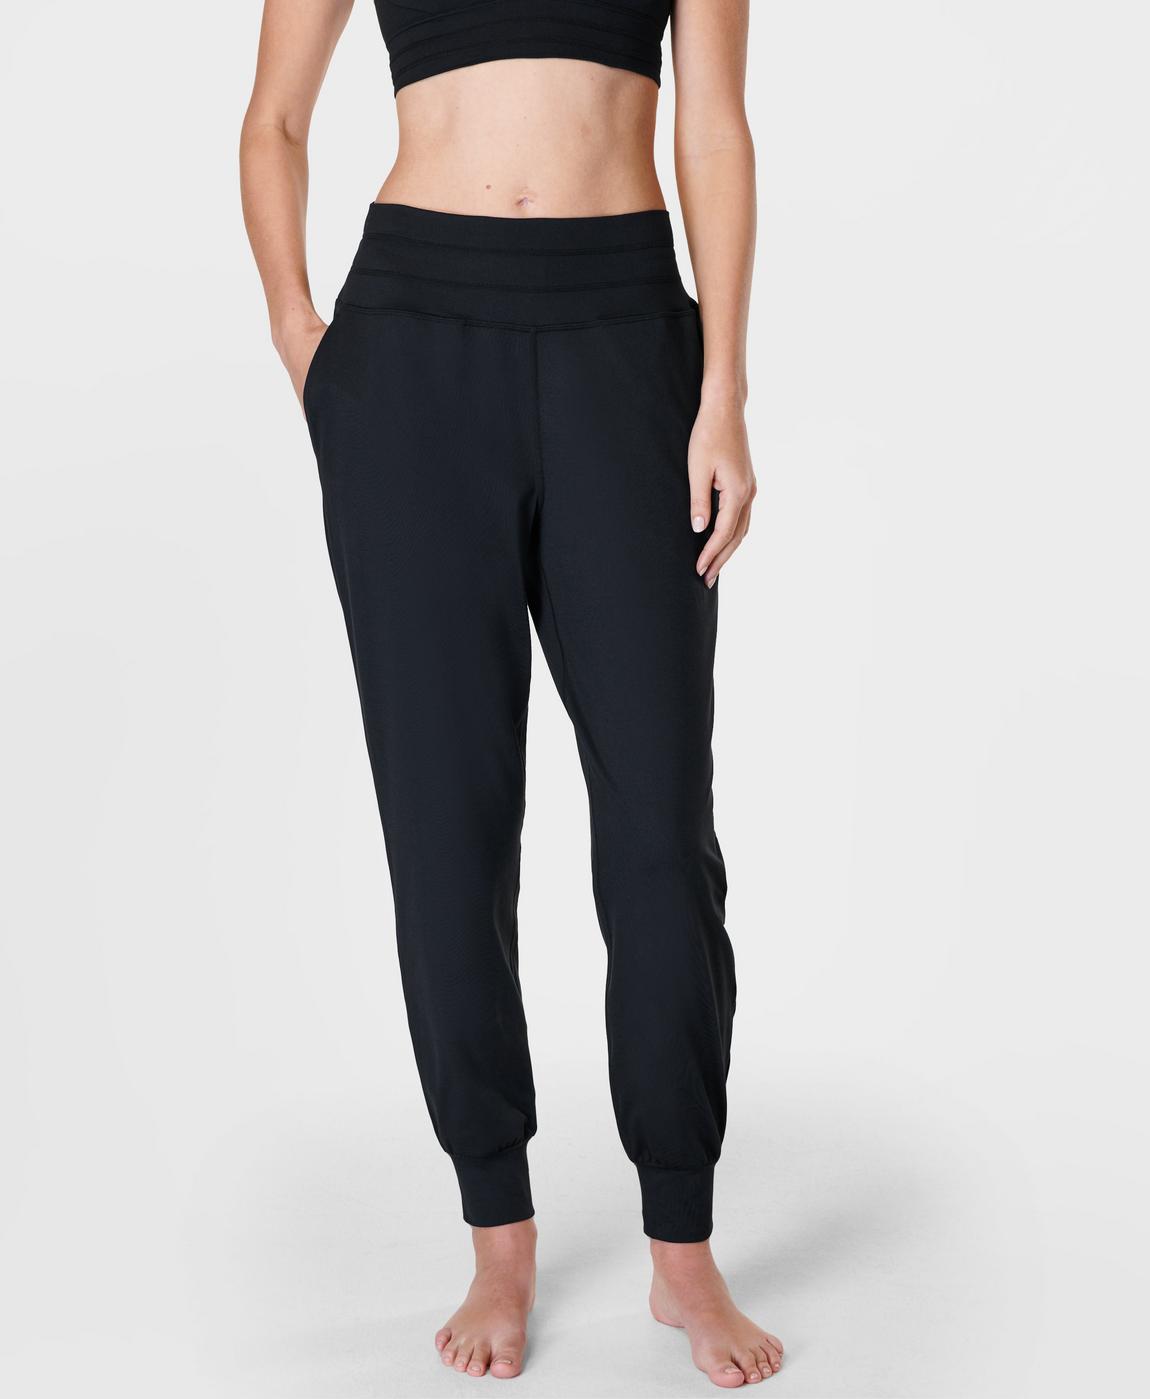 Gaia Yoga Pants - Black, Women's Trousers & Yoga Pants